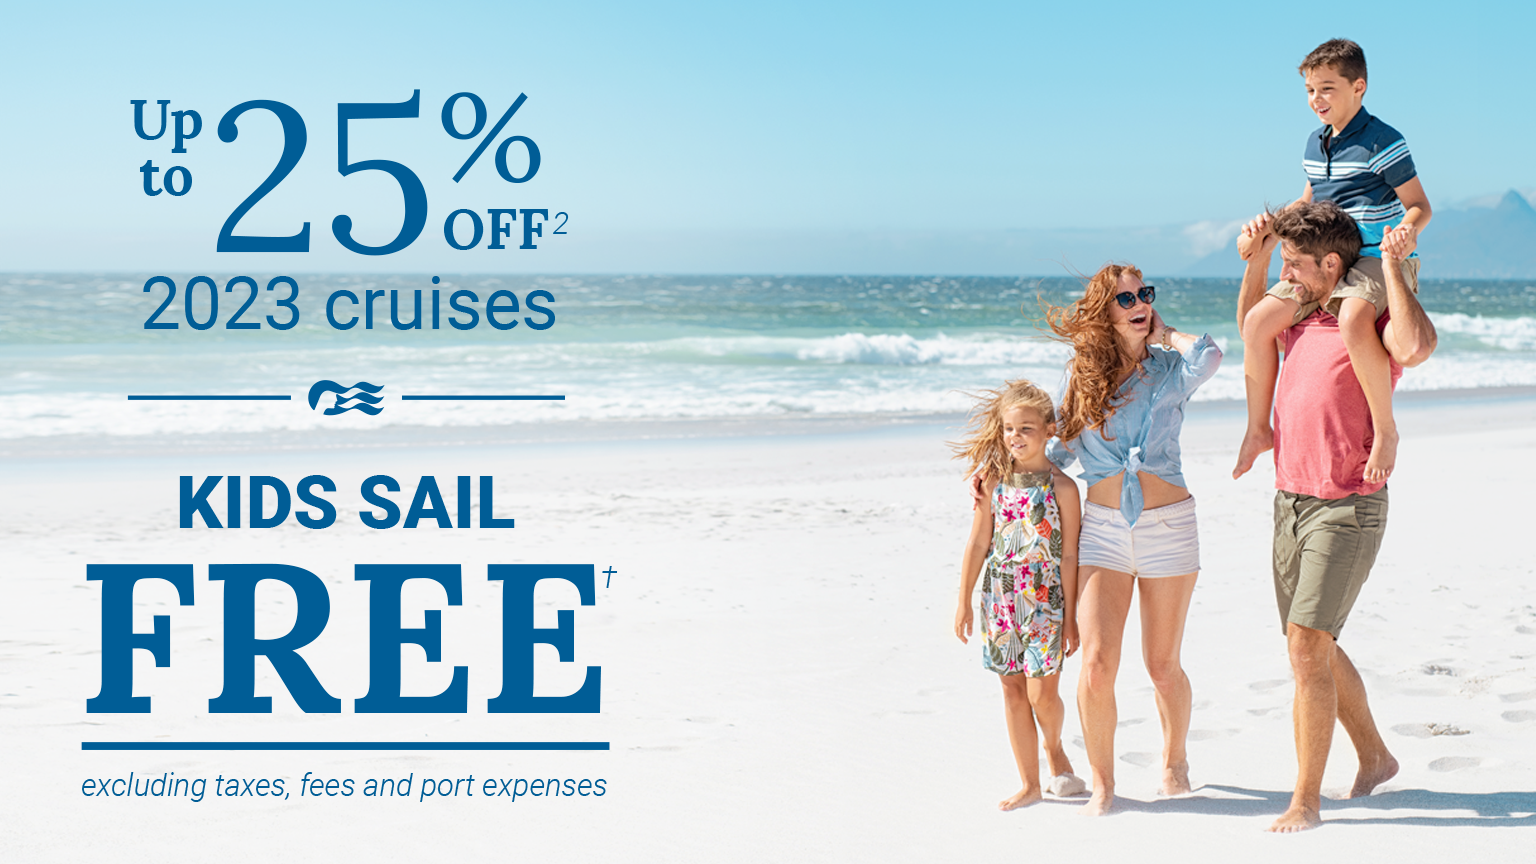 Princess Cruises New Kids Sail Free Promotion LaptrinhX / News